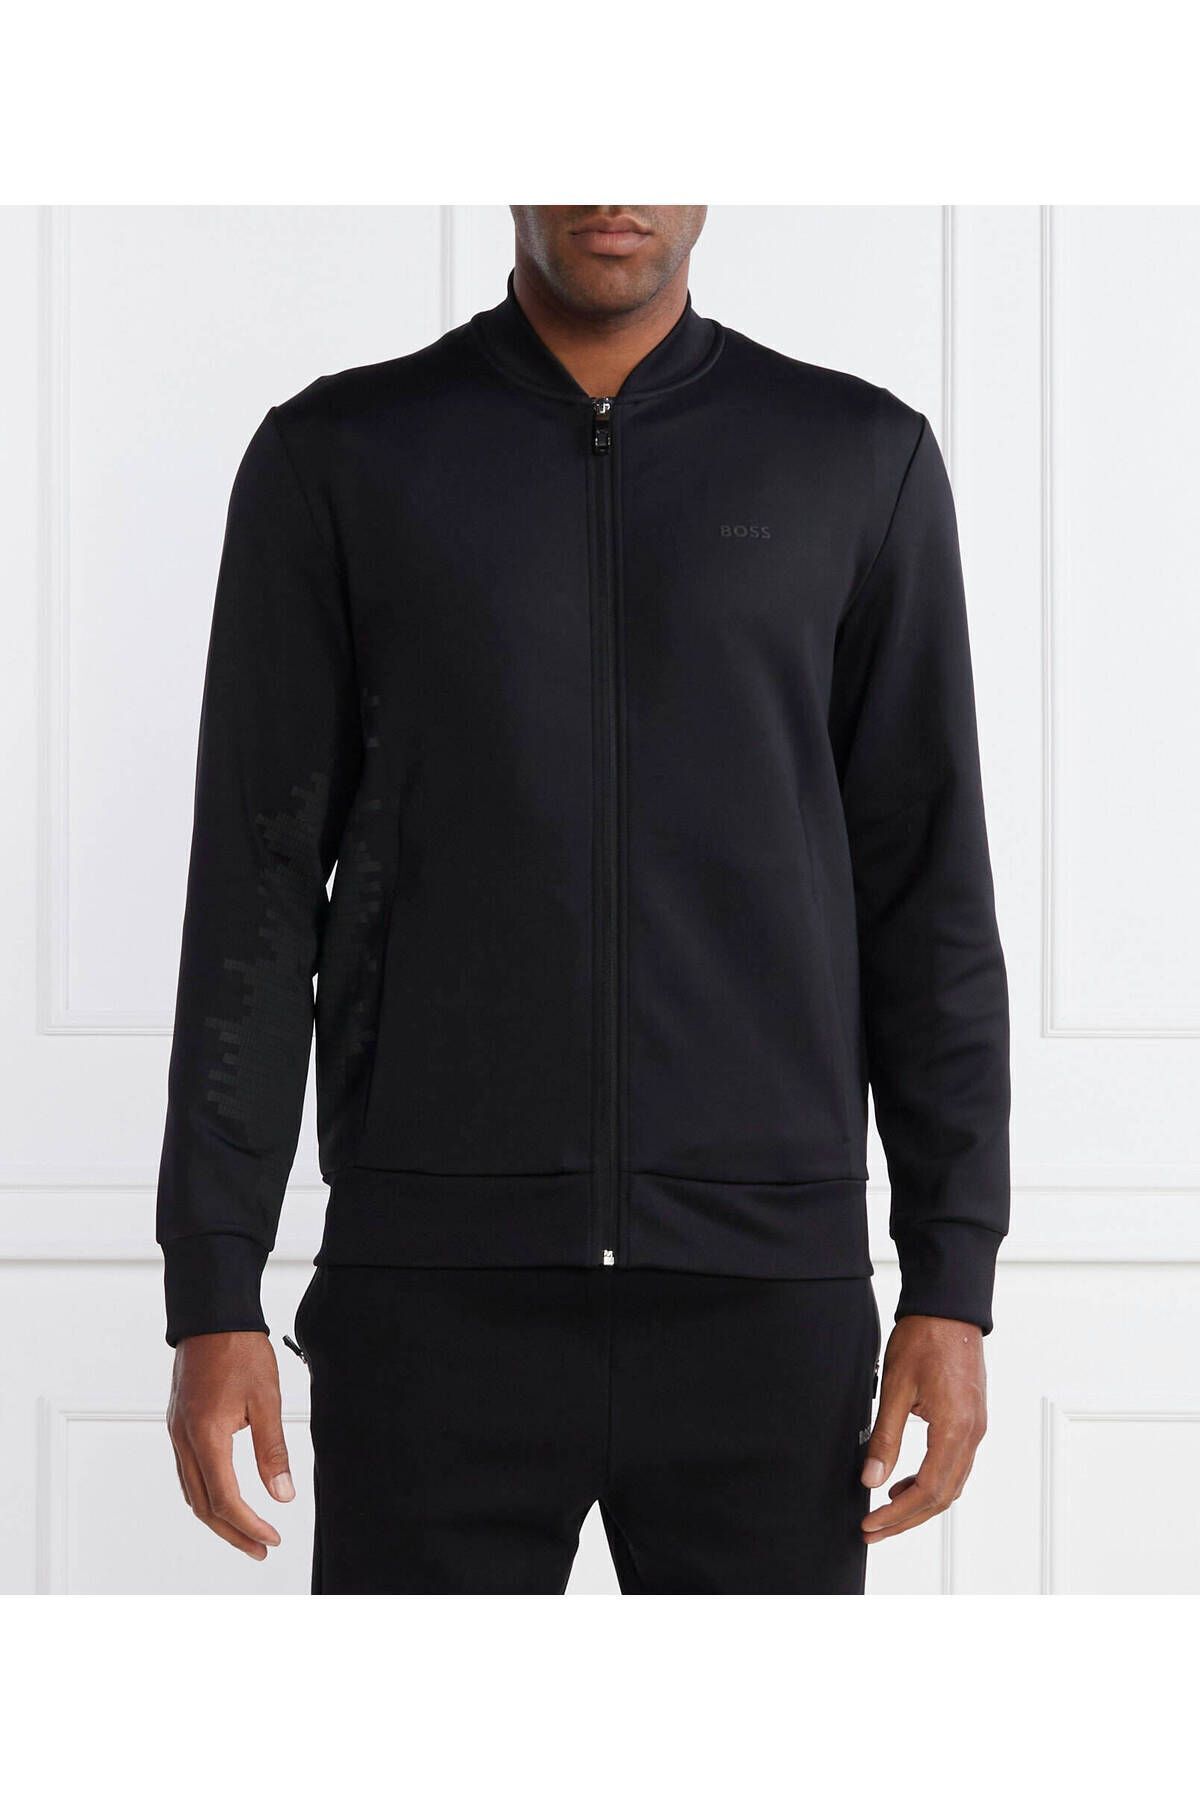 BOSS Erkek Marka Logo Detaylı Regular Fit Uzun Kollu Siyah Sweatshirt 50505061-001